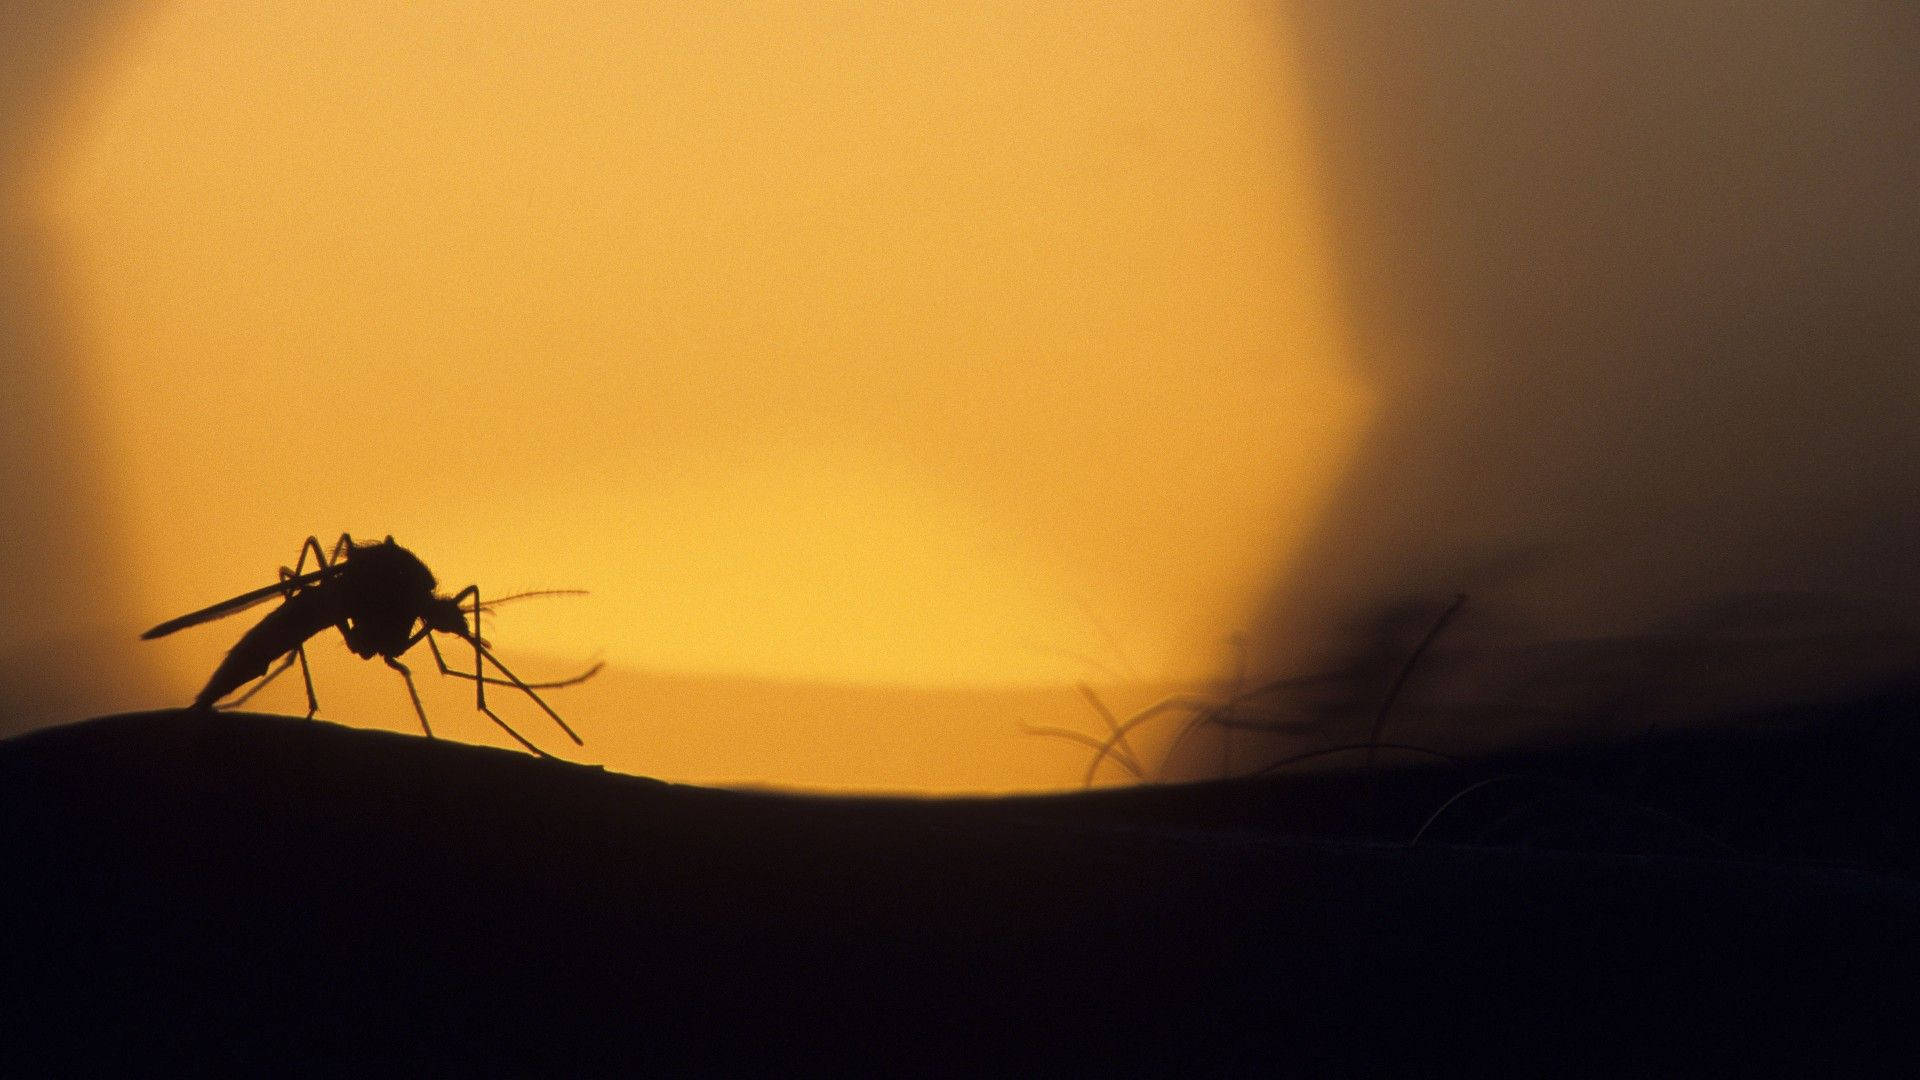 Mückenschatten Während Des Sonnenuntergangs Wallpaper